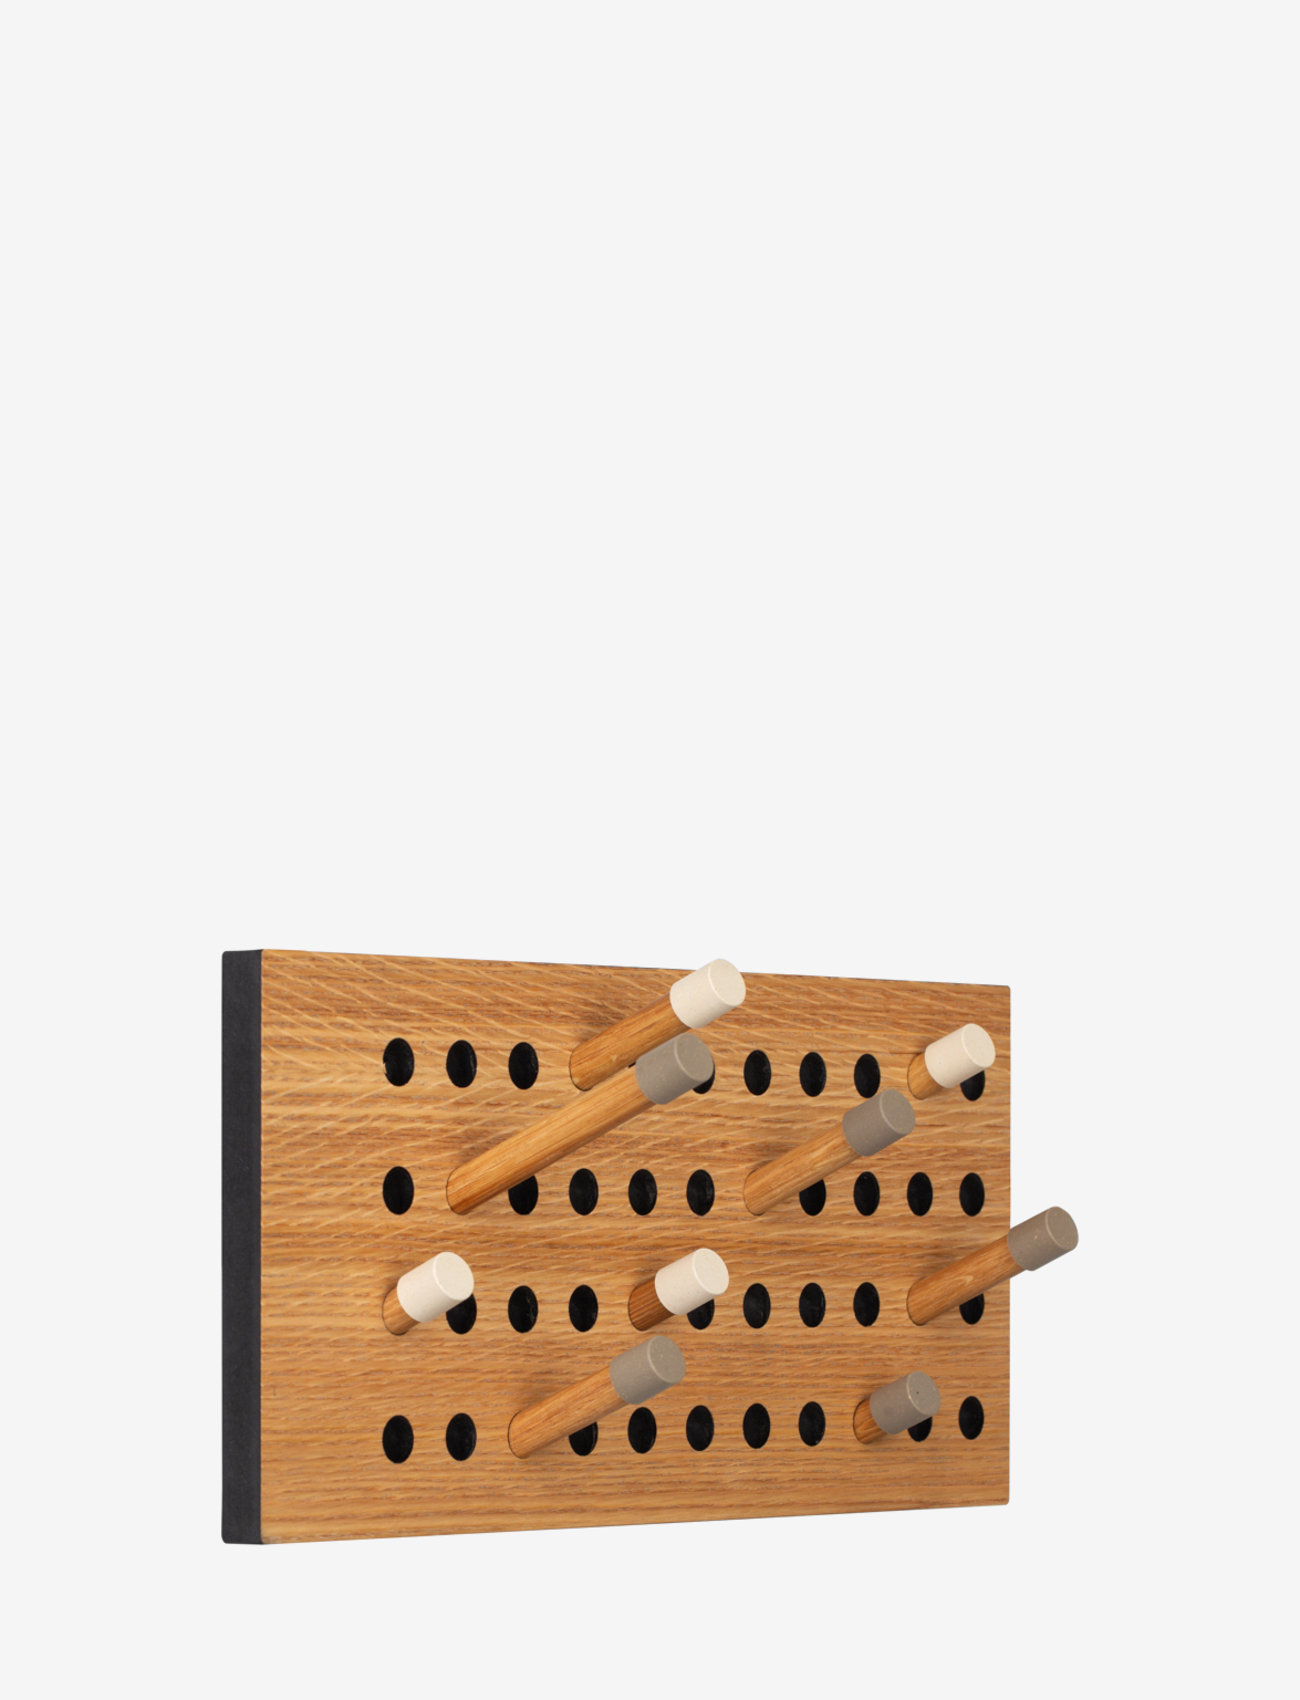 We Do Wood - Scoreboard Small, Horizontal - haken & kapstokrekken - fsc oak veneer, dots with upcycled plastic - 1